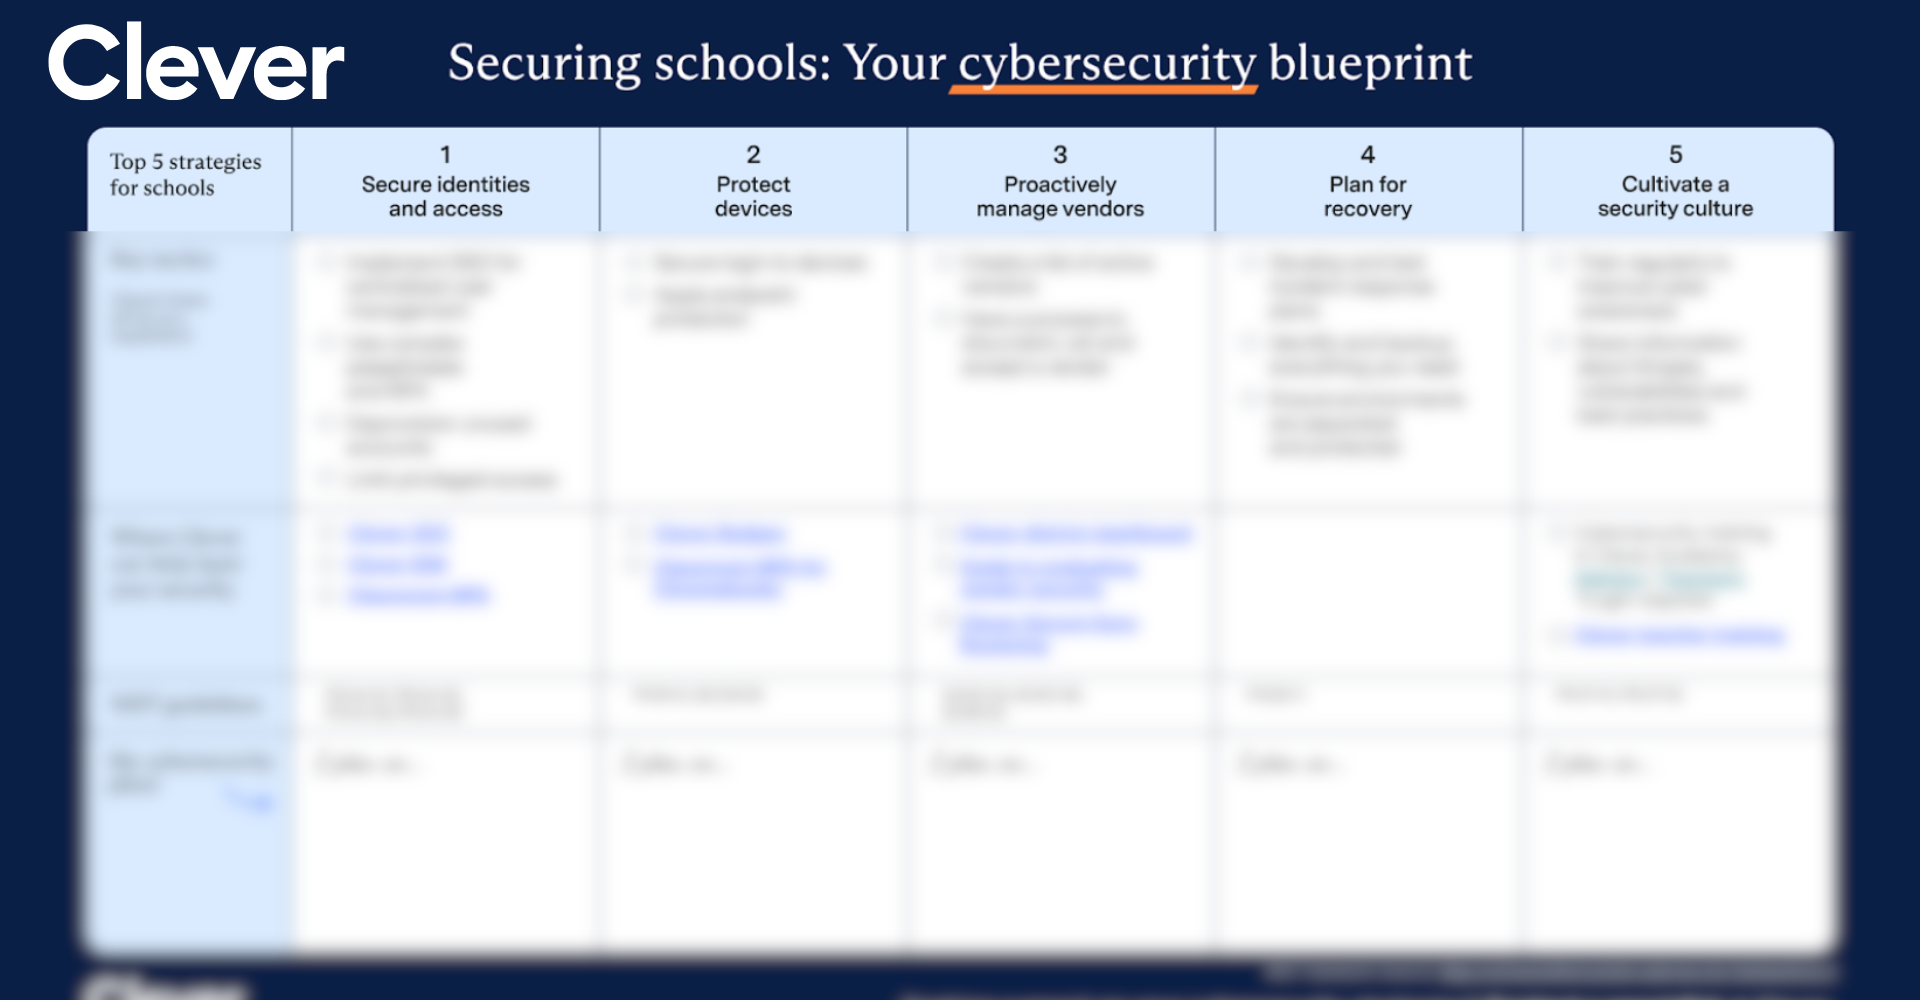 The K-12 cybersecurity blueprint